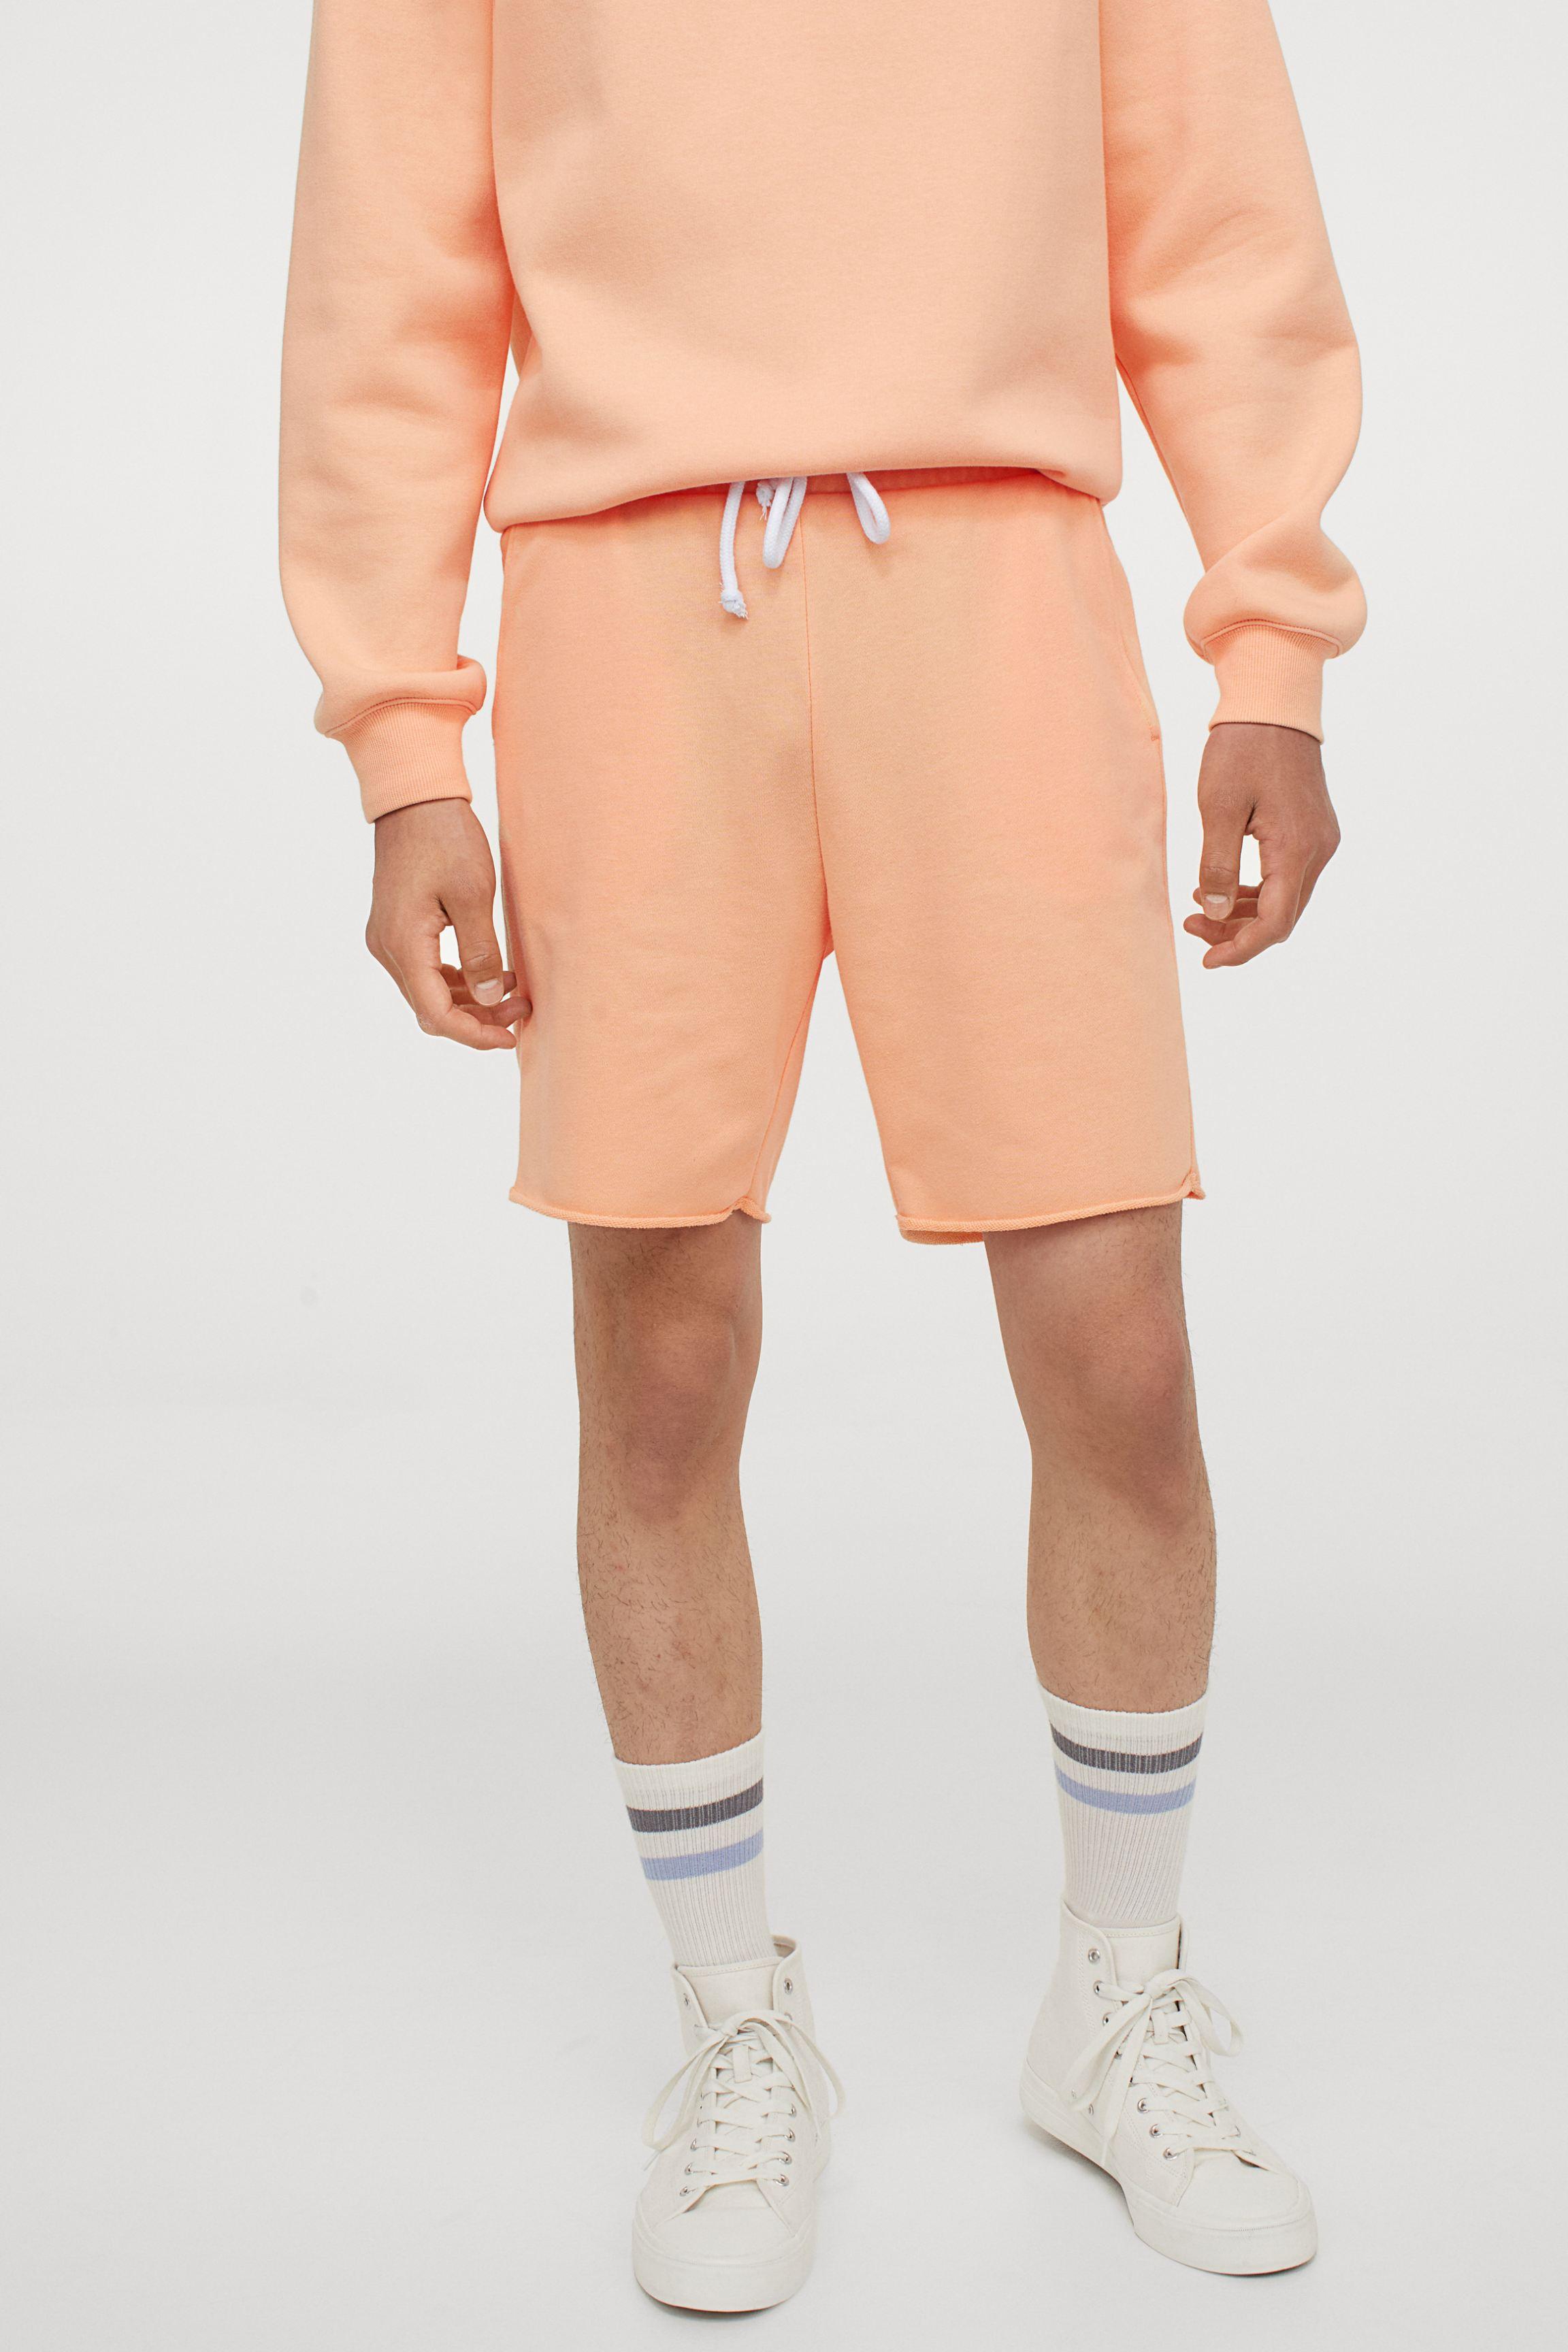 H&M Cotton 2-pack Regular Fit Sweatshorts in Peach Pink/Gray Melange (Pink)  for Men - Lyst